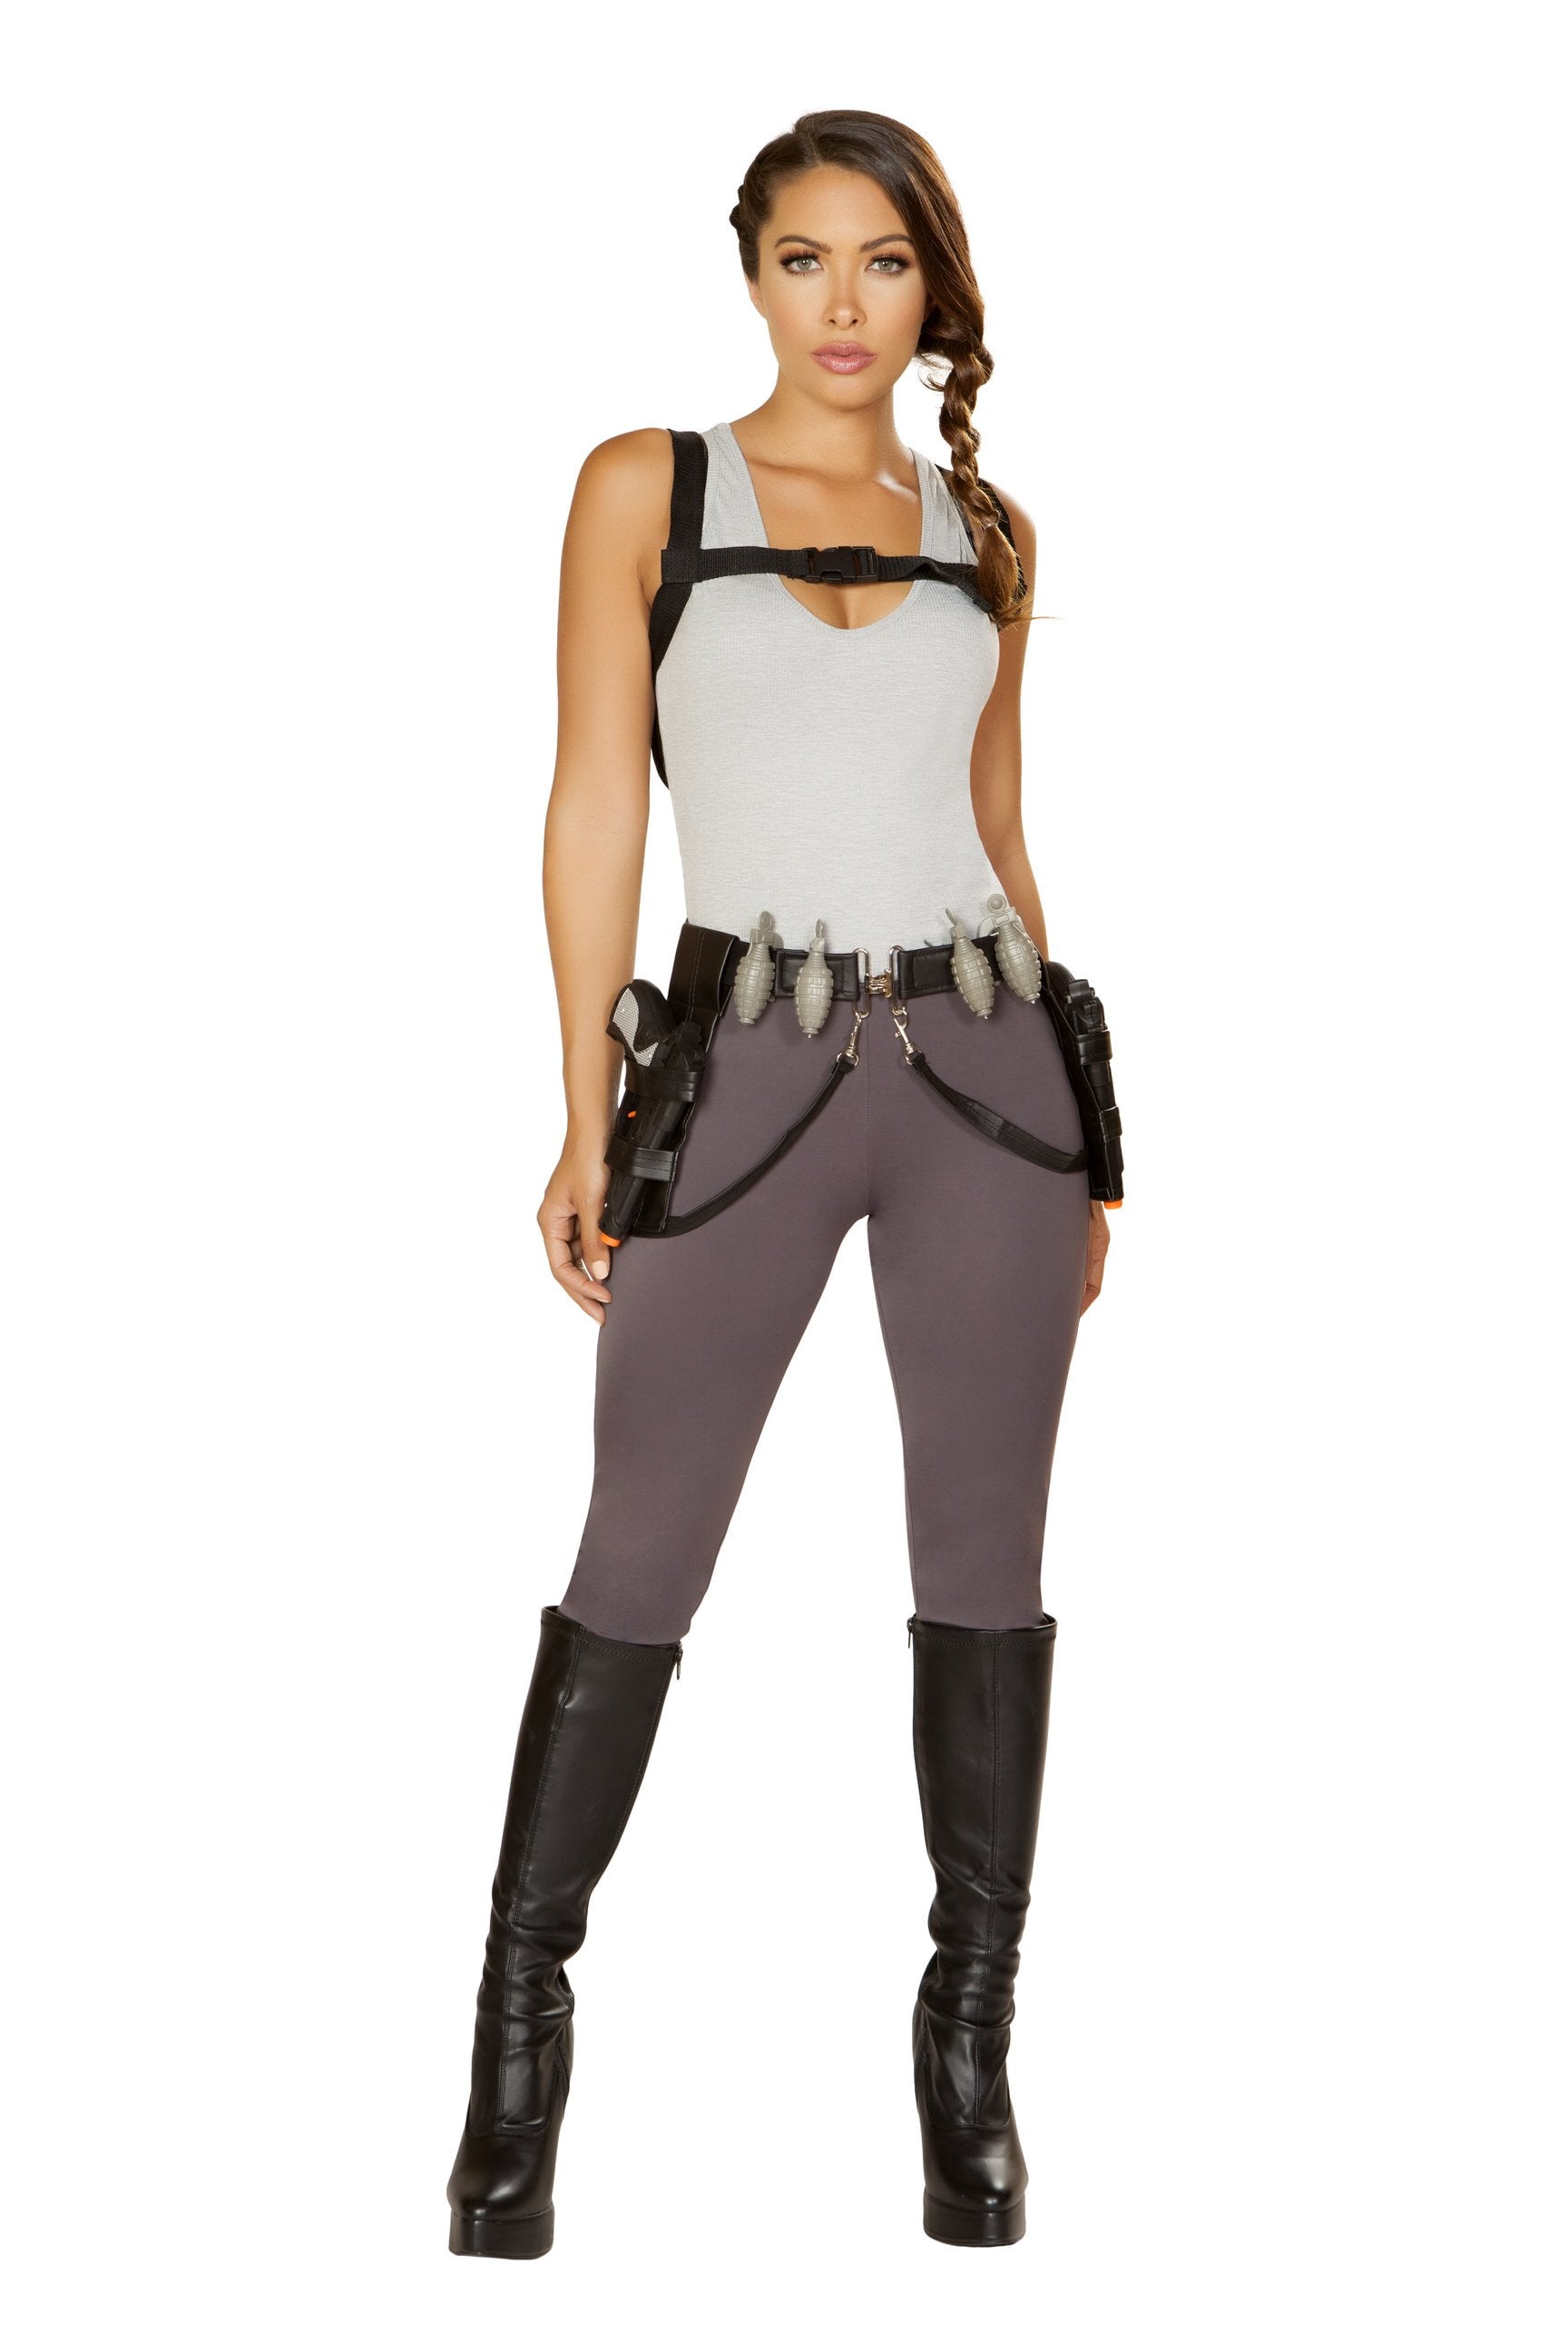 4847 - Roma Costume 5pc Cyber Adventure Tomb Raider Lara Croft